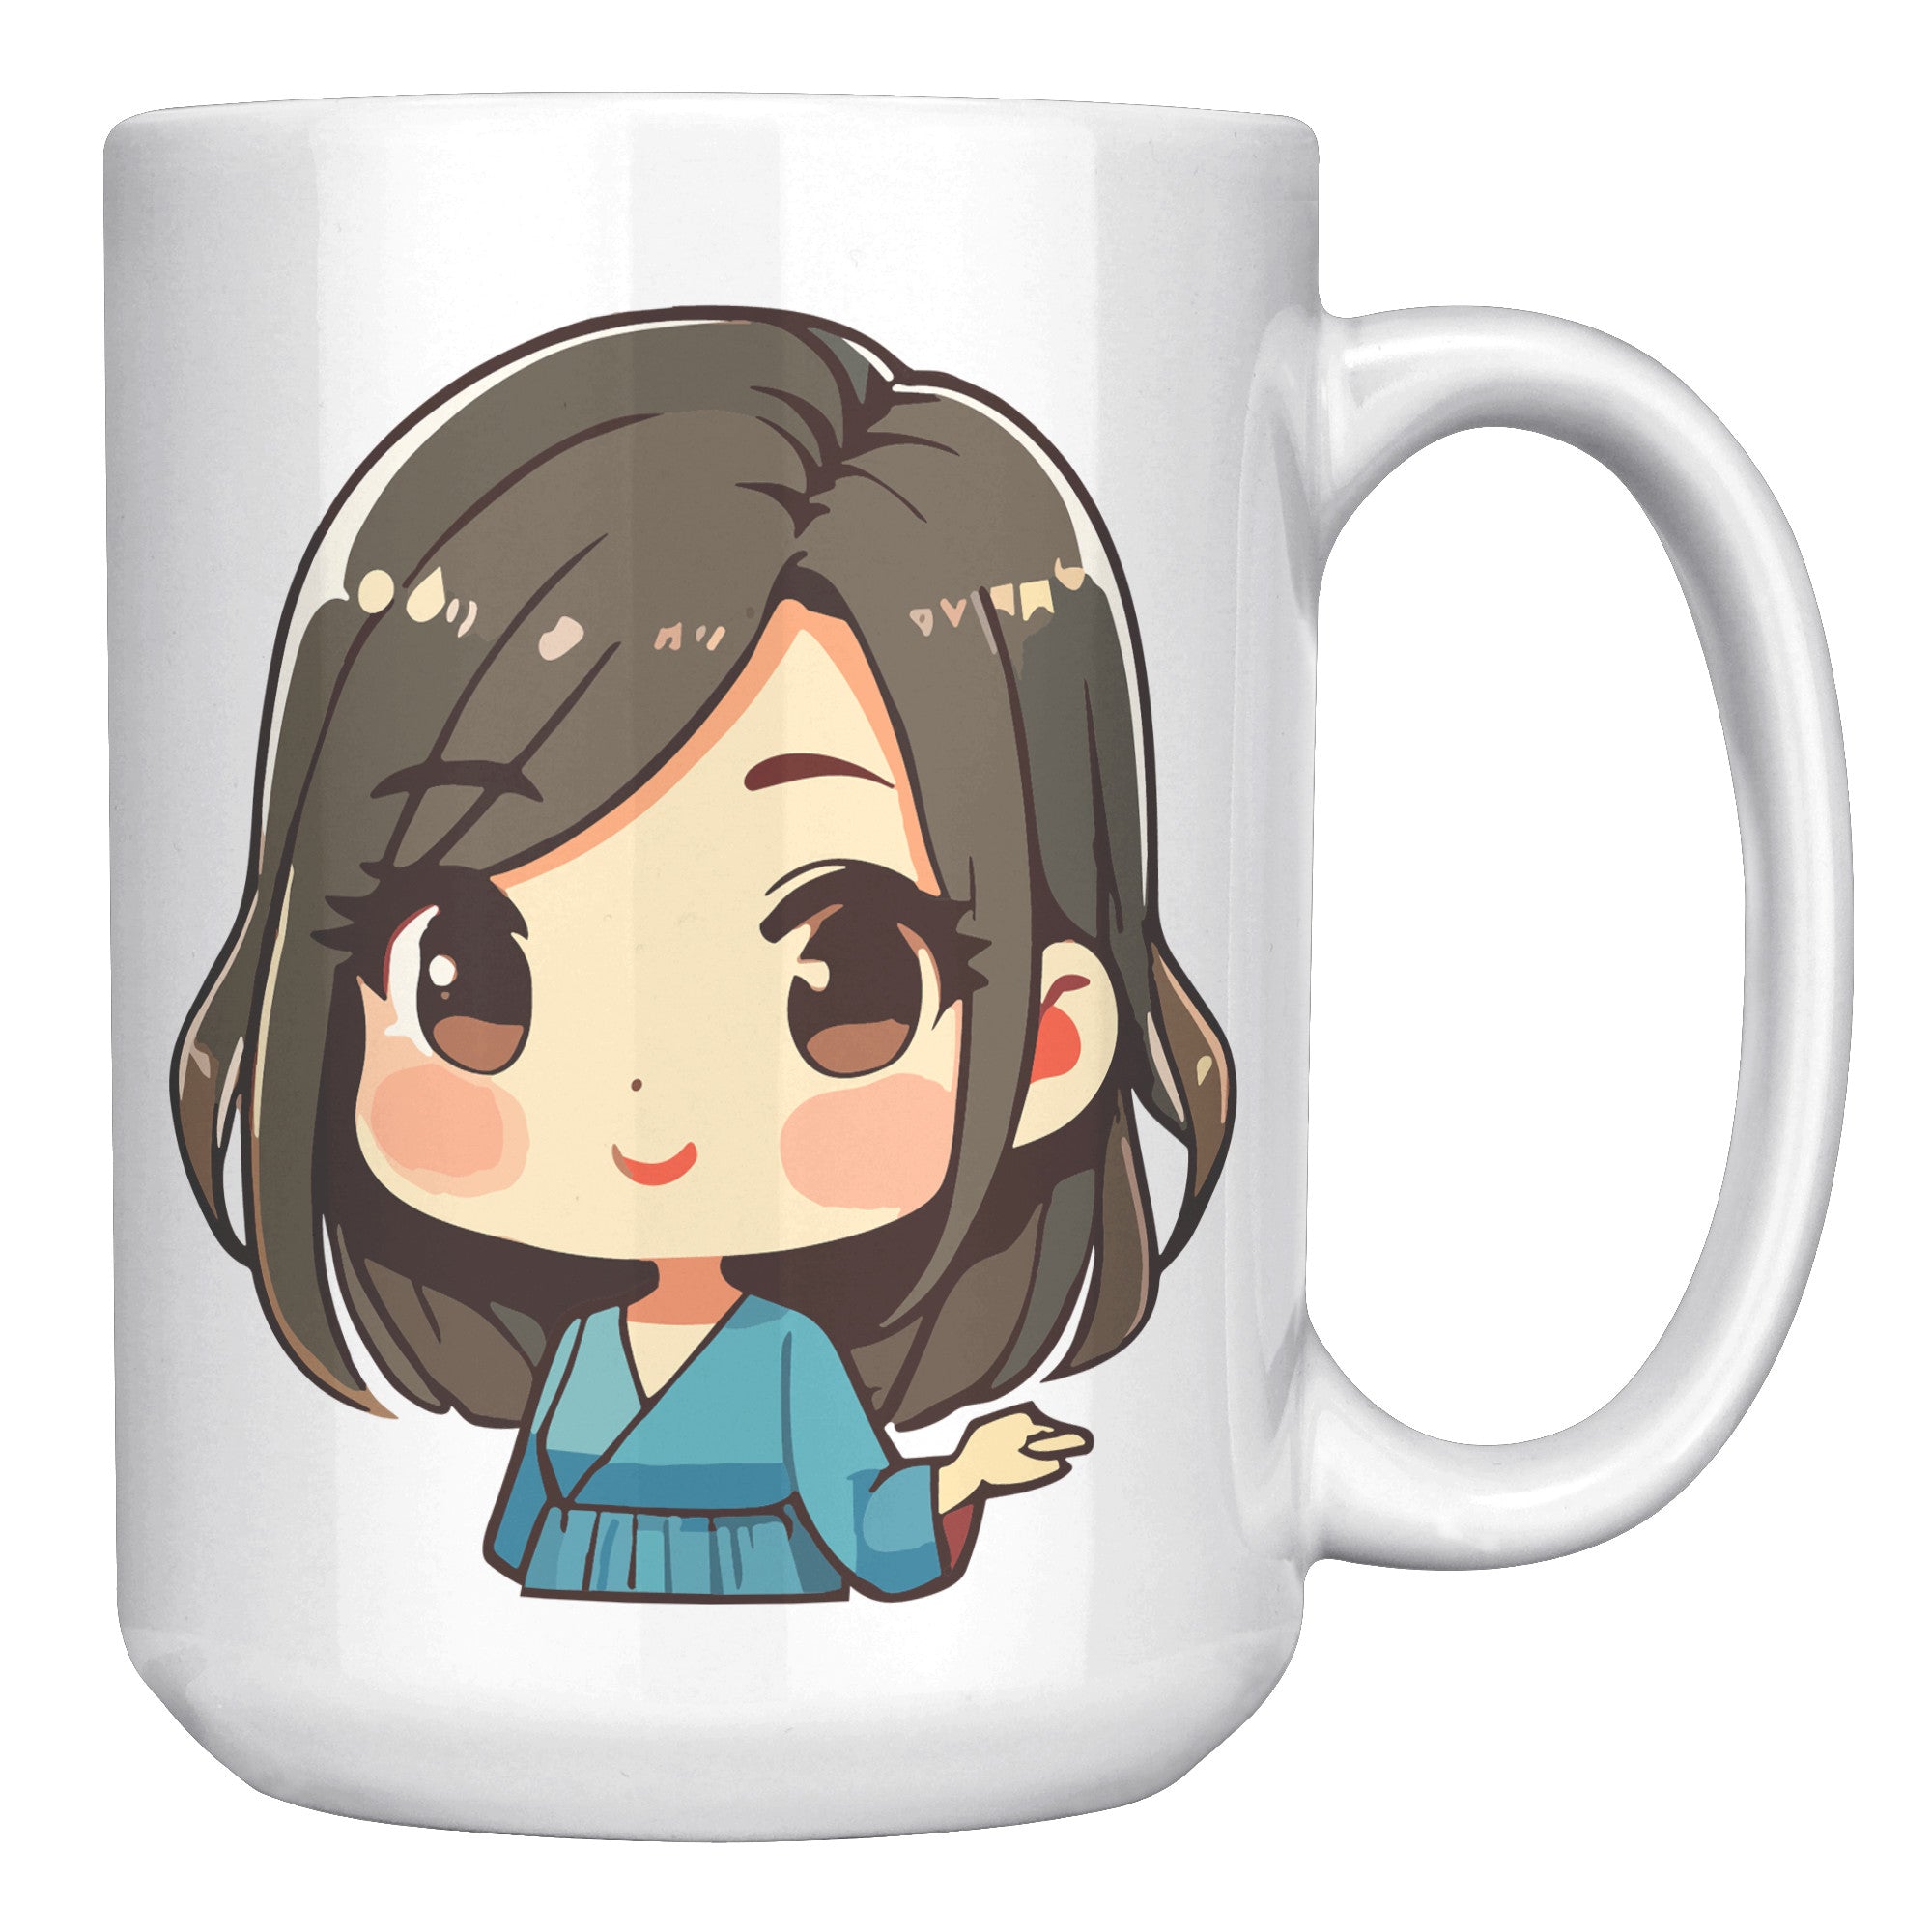 "Marites Gossip Queen Coffee Mug - Cute Cartoon 'Ano Ang Latest?' Cup - Perfect Chismosa Gift - Filipino Slang Tea Mug" - DD1